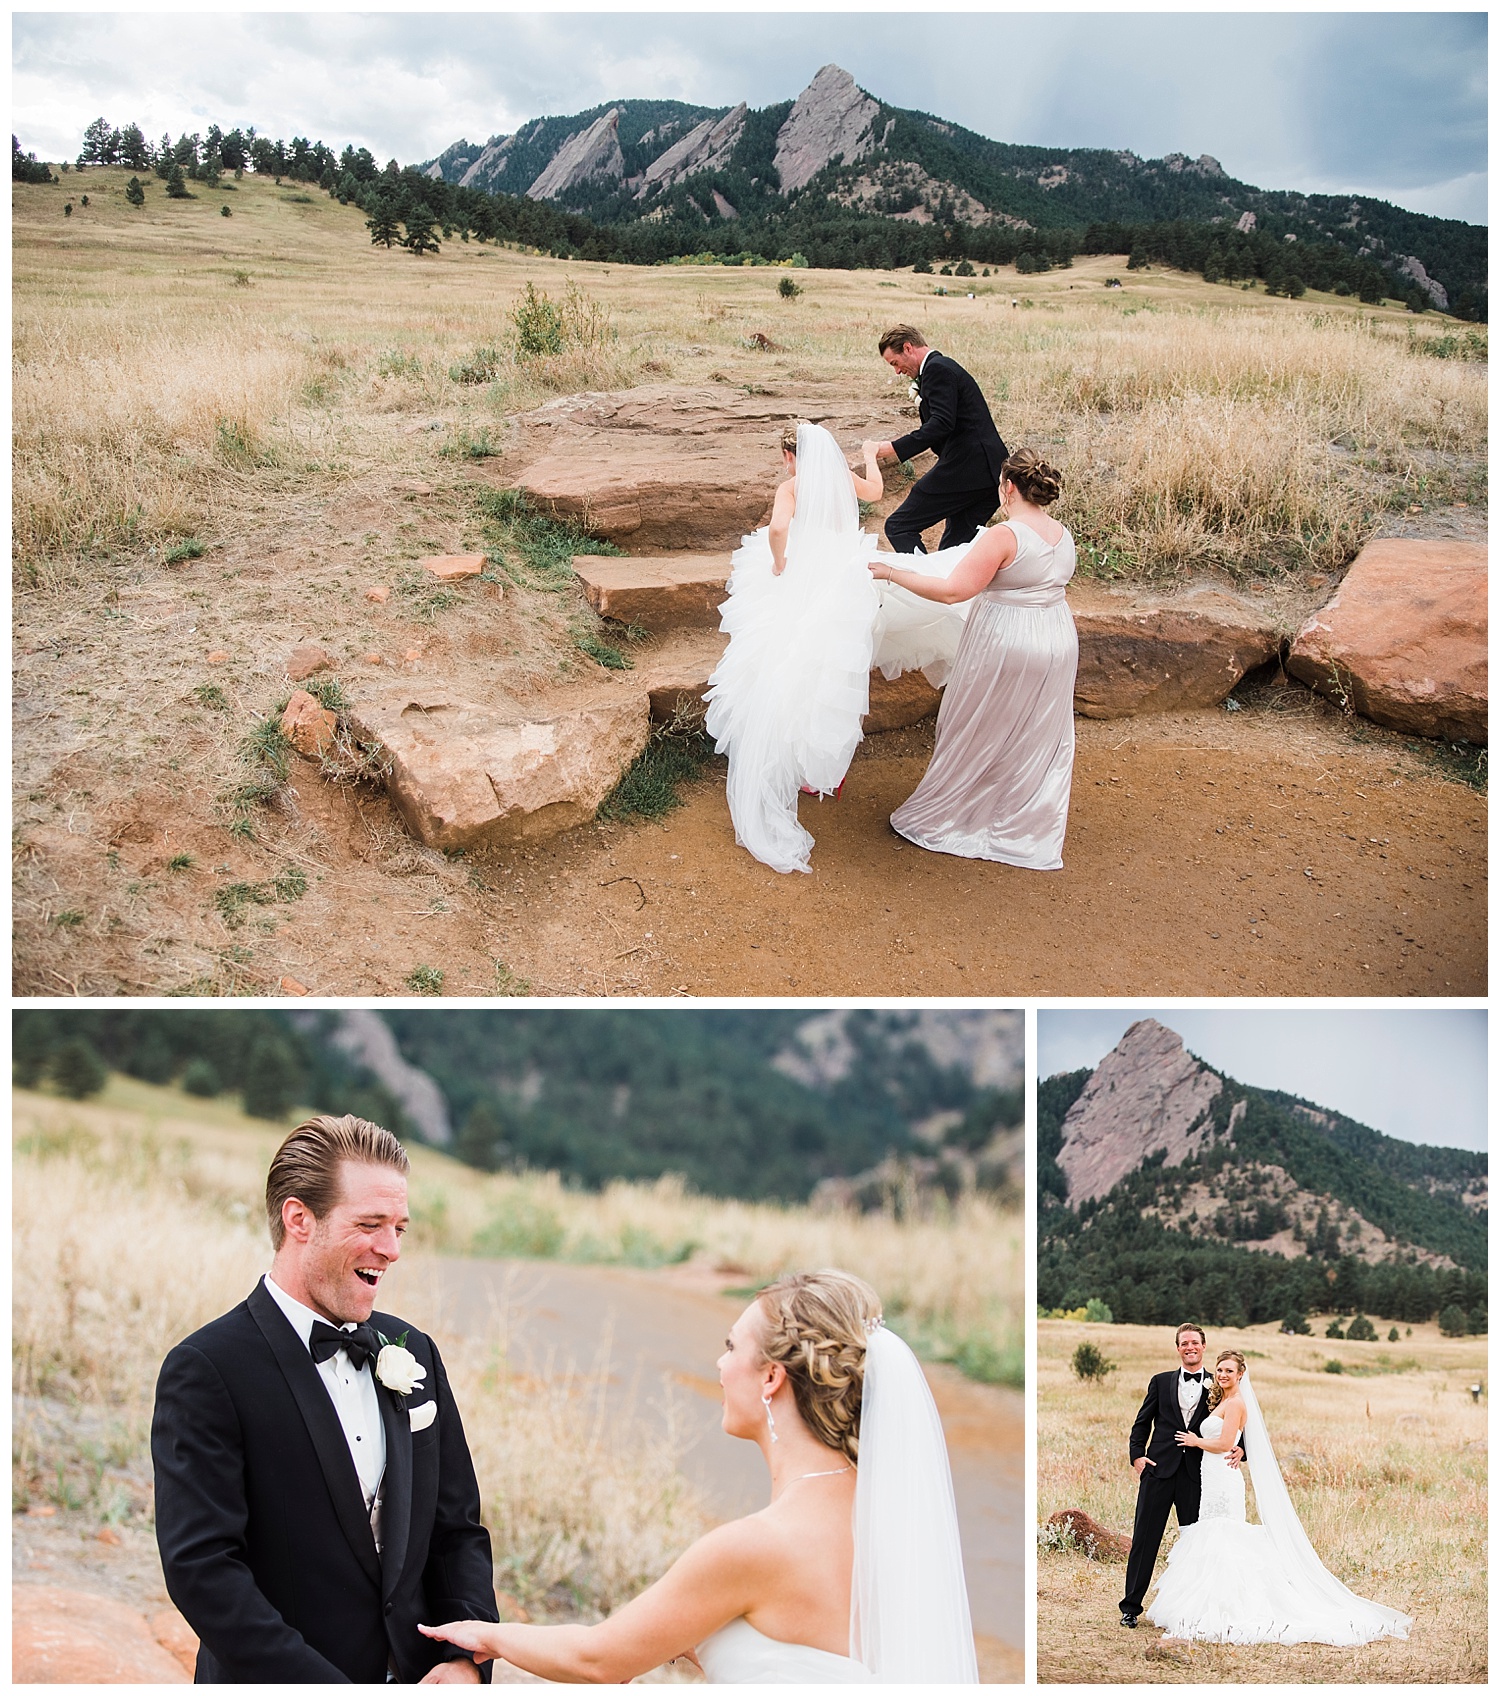 Wedgewood_Boulder_Creek_Wedding_Venue_Colorado_Photographer_Apollo_Fields_008.jpg